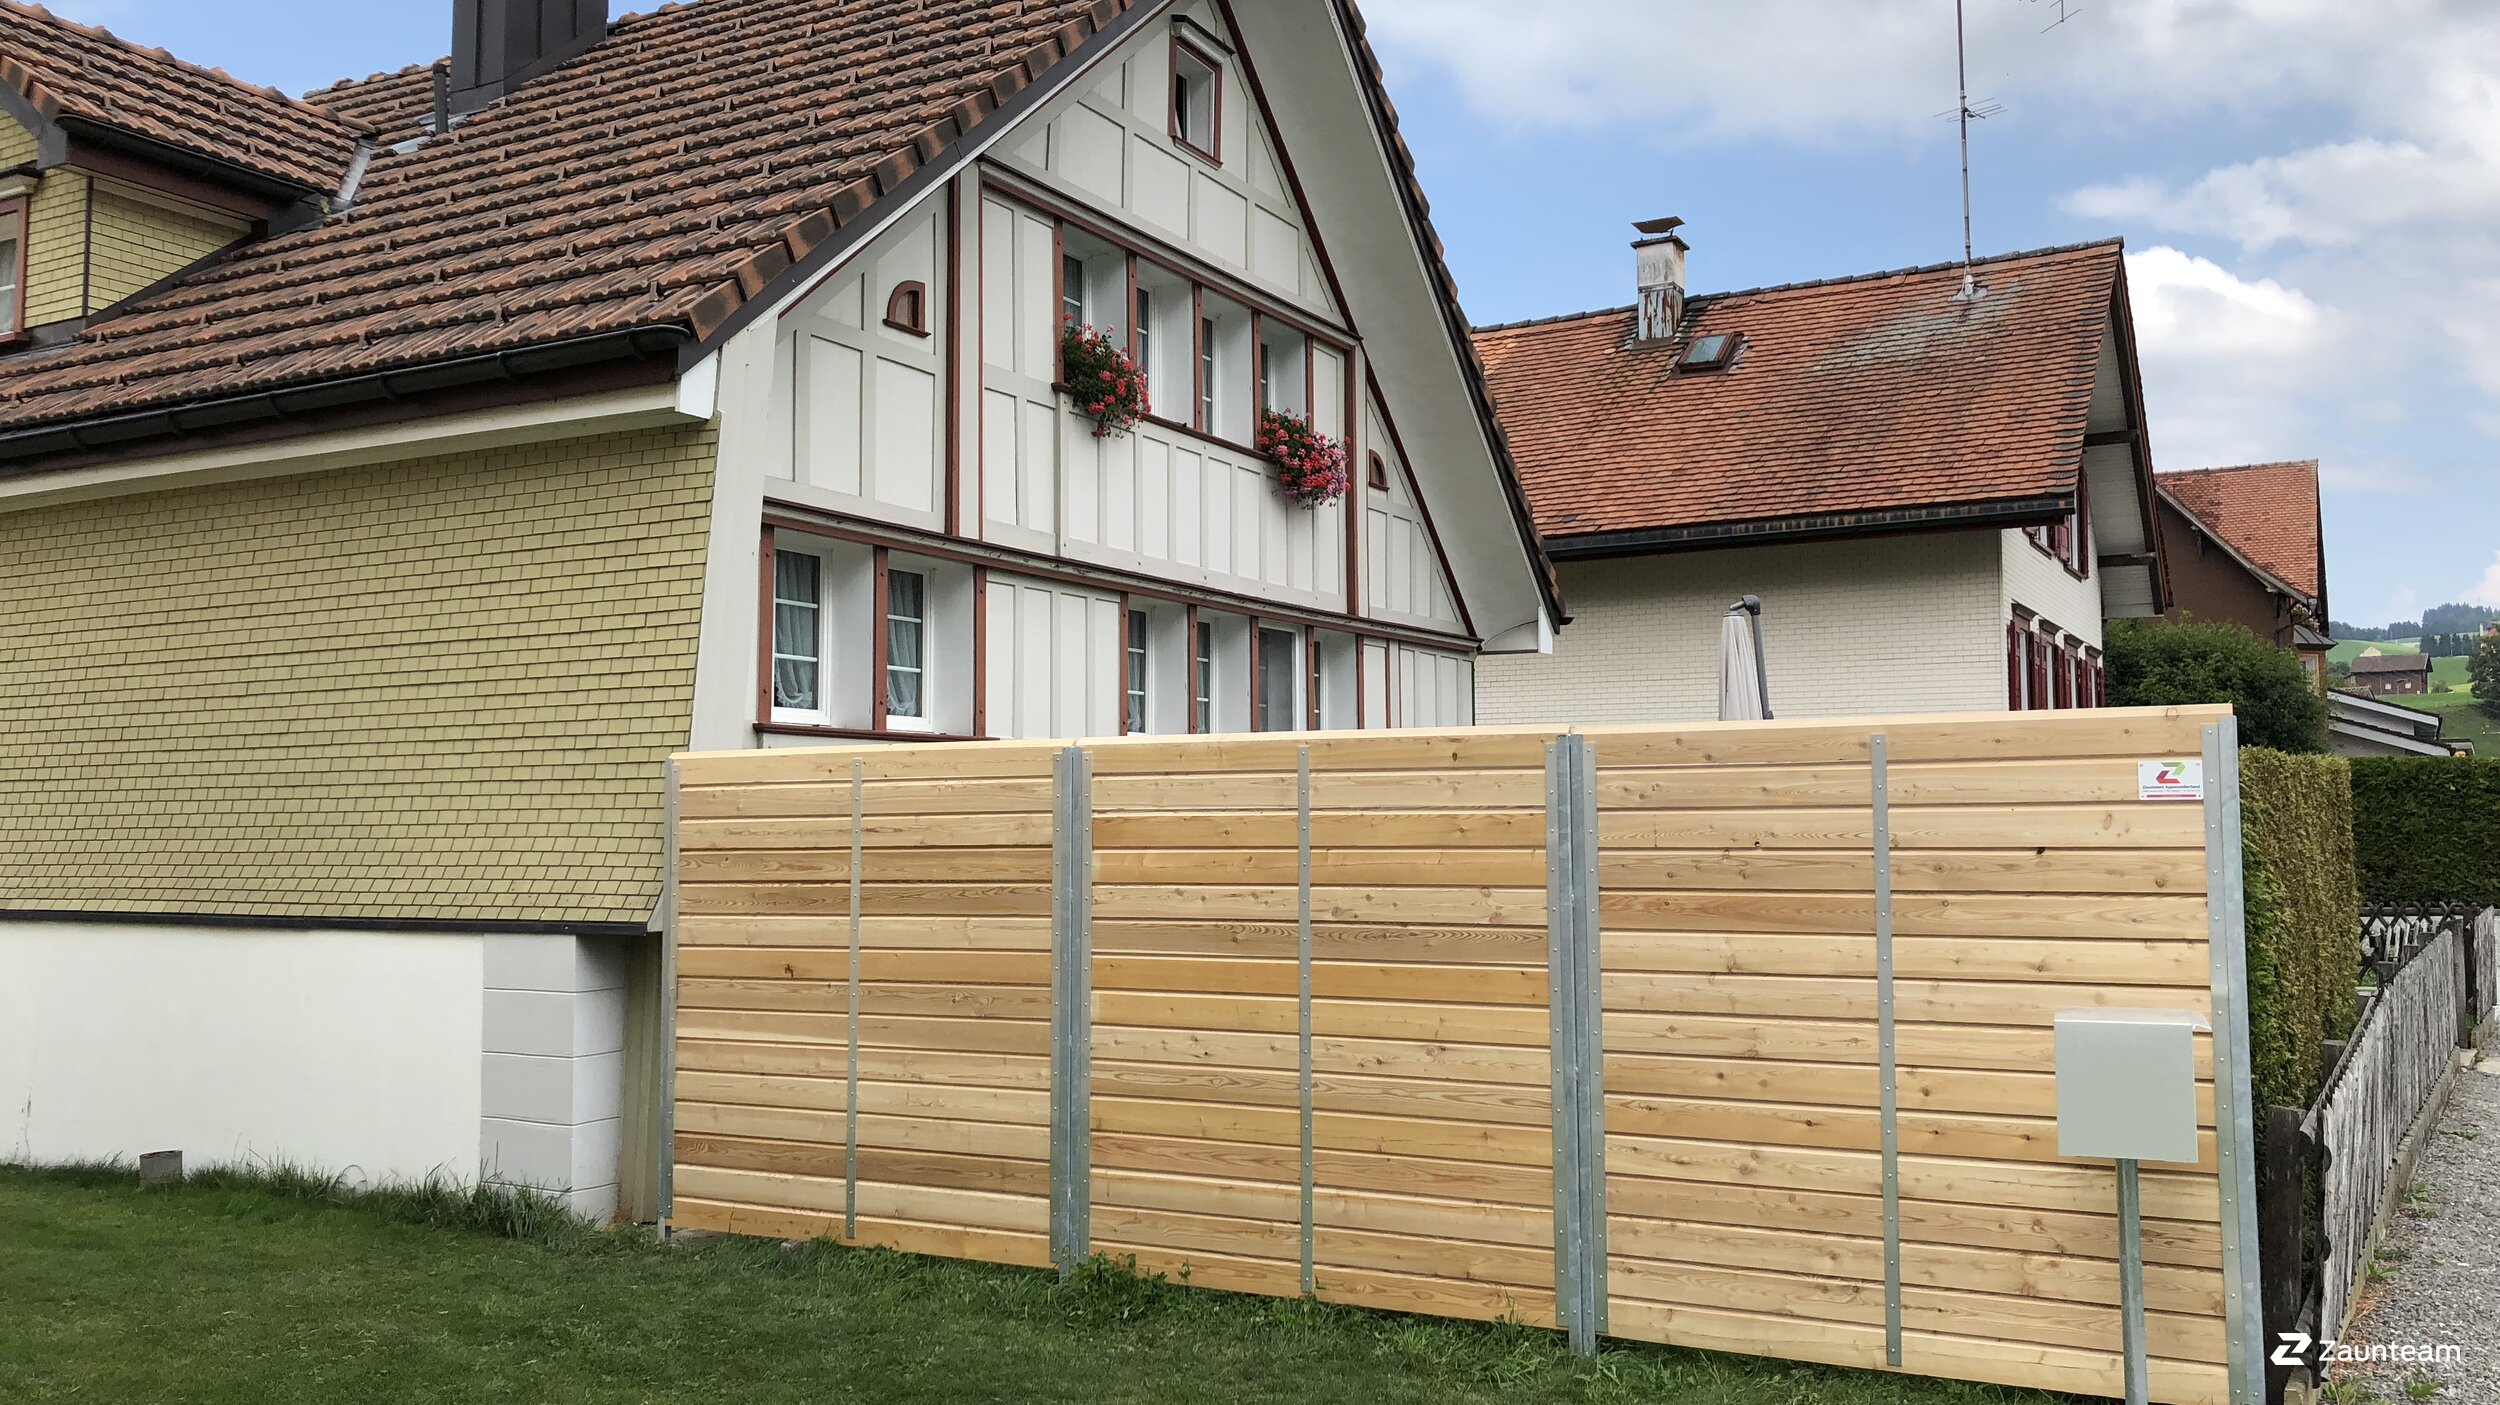 Clôture ranch de 2018 à 9050 Appenzell Suisse de Zaunteam Appenzellerland.